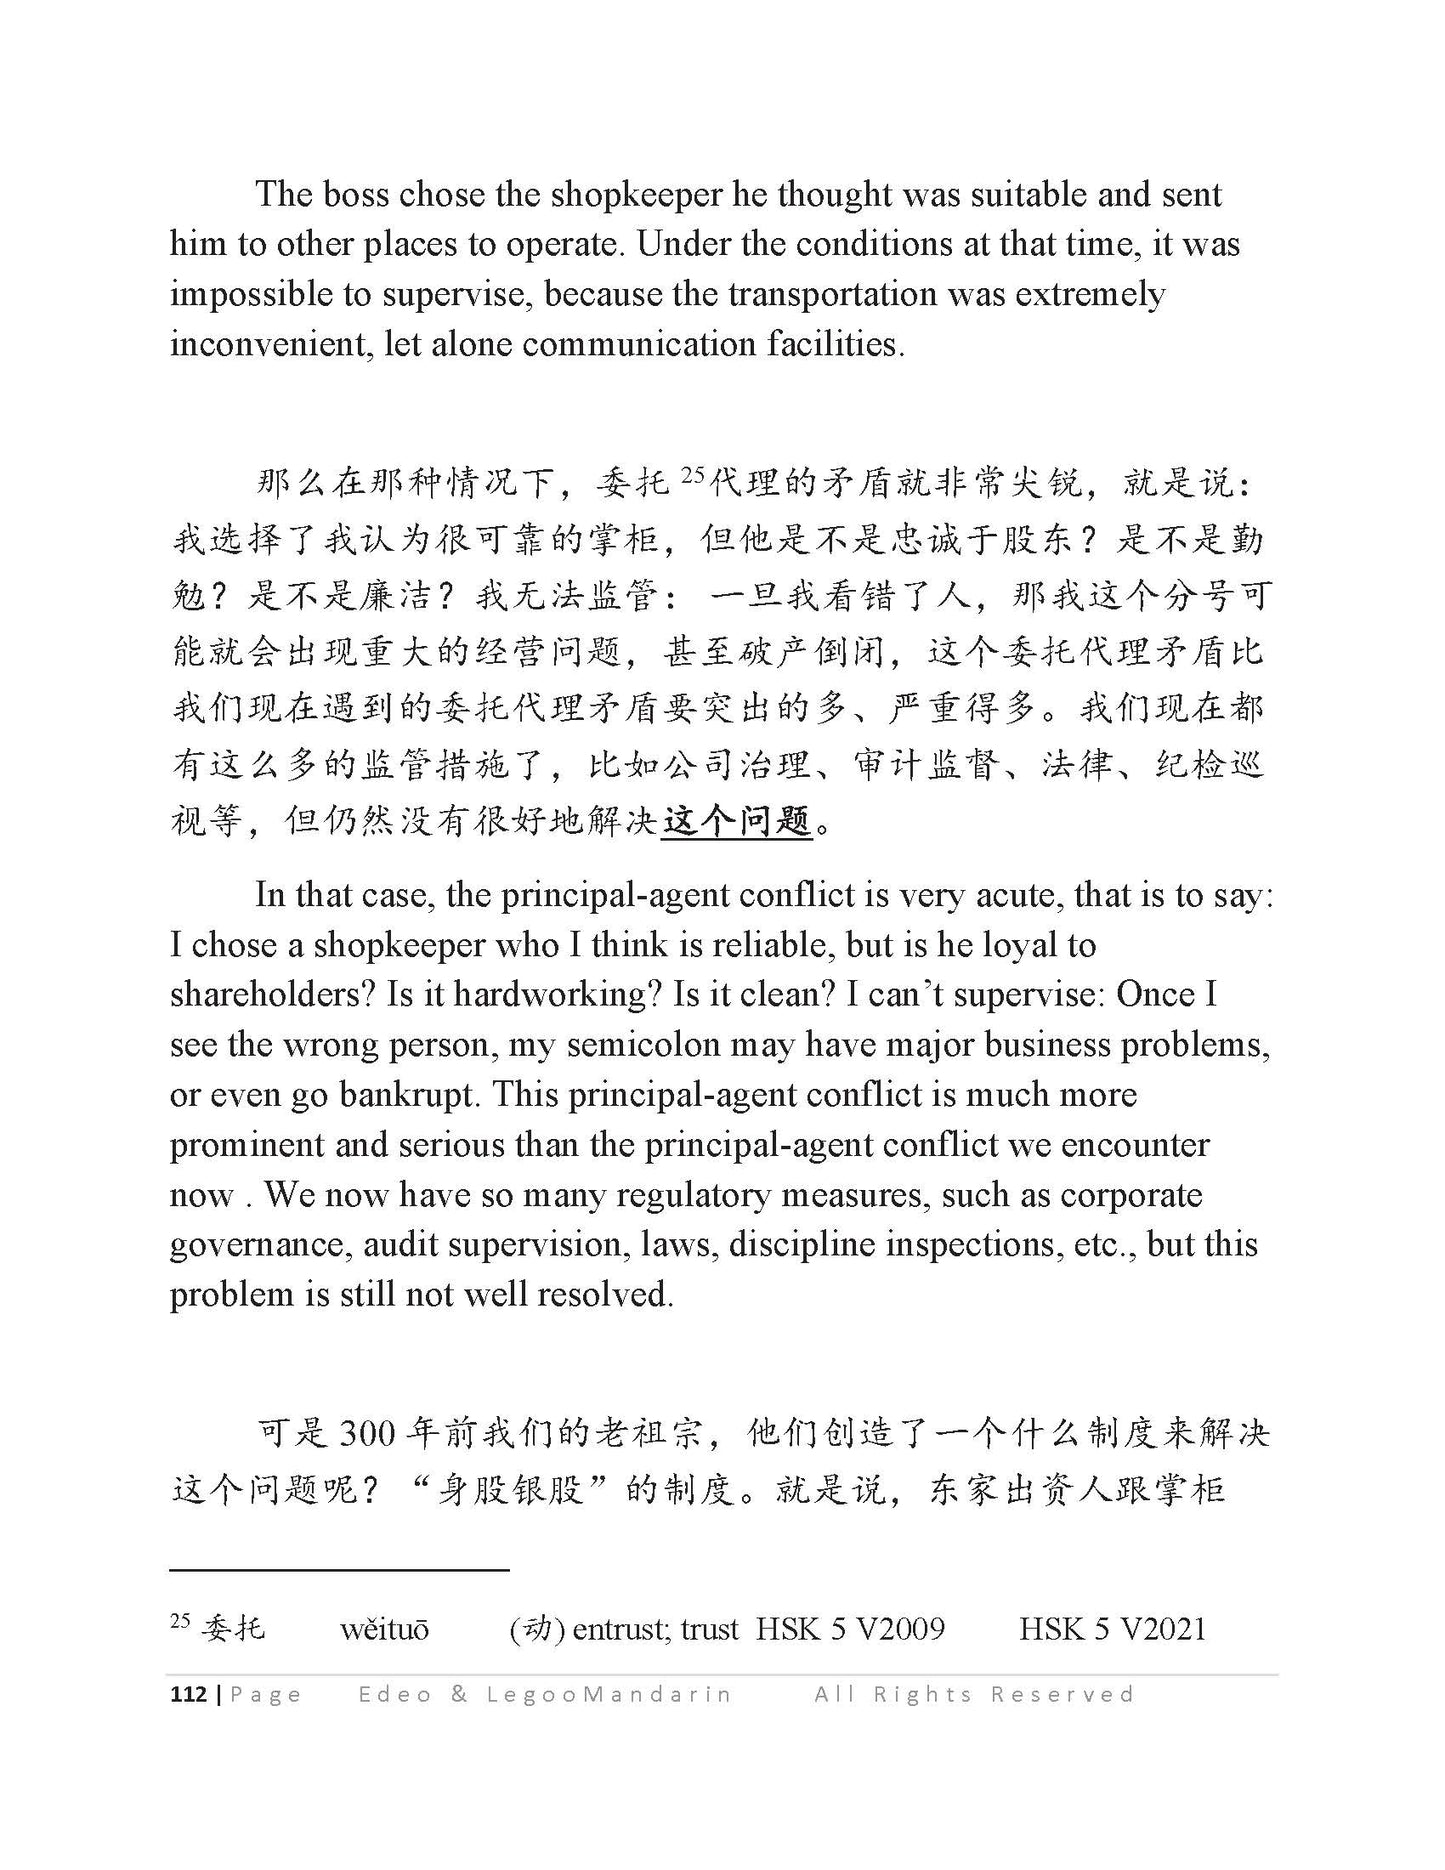 Chinese Proficiency Test HSK 7-9 Official Mock Version 2021 汉语水平考试 HSK7-9 最新官方模拟试题